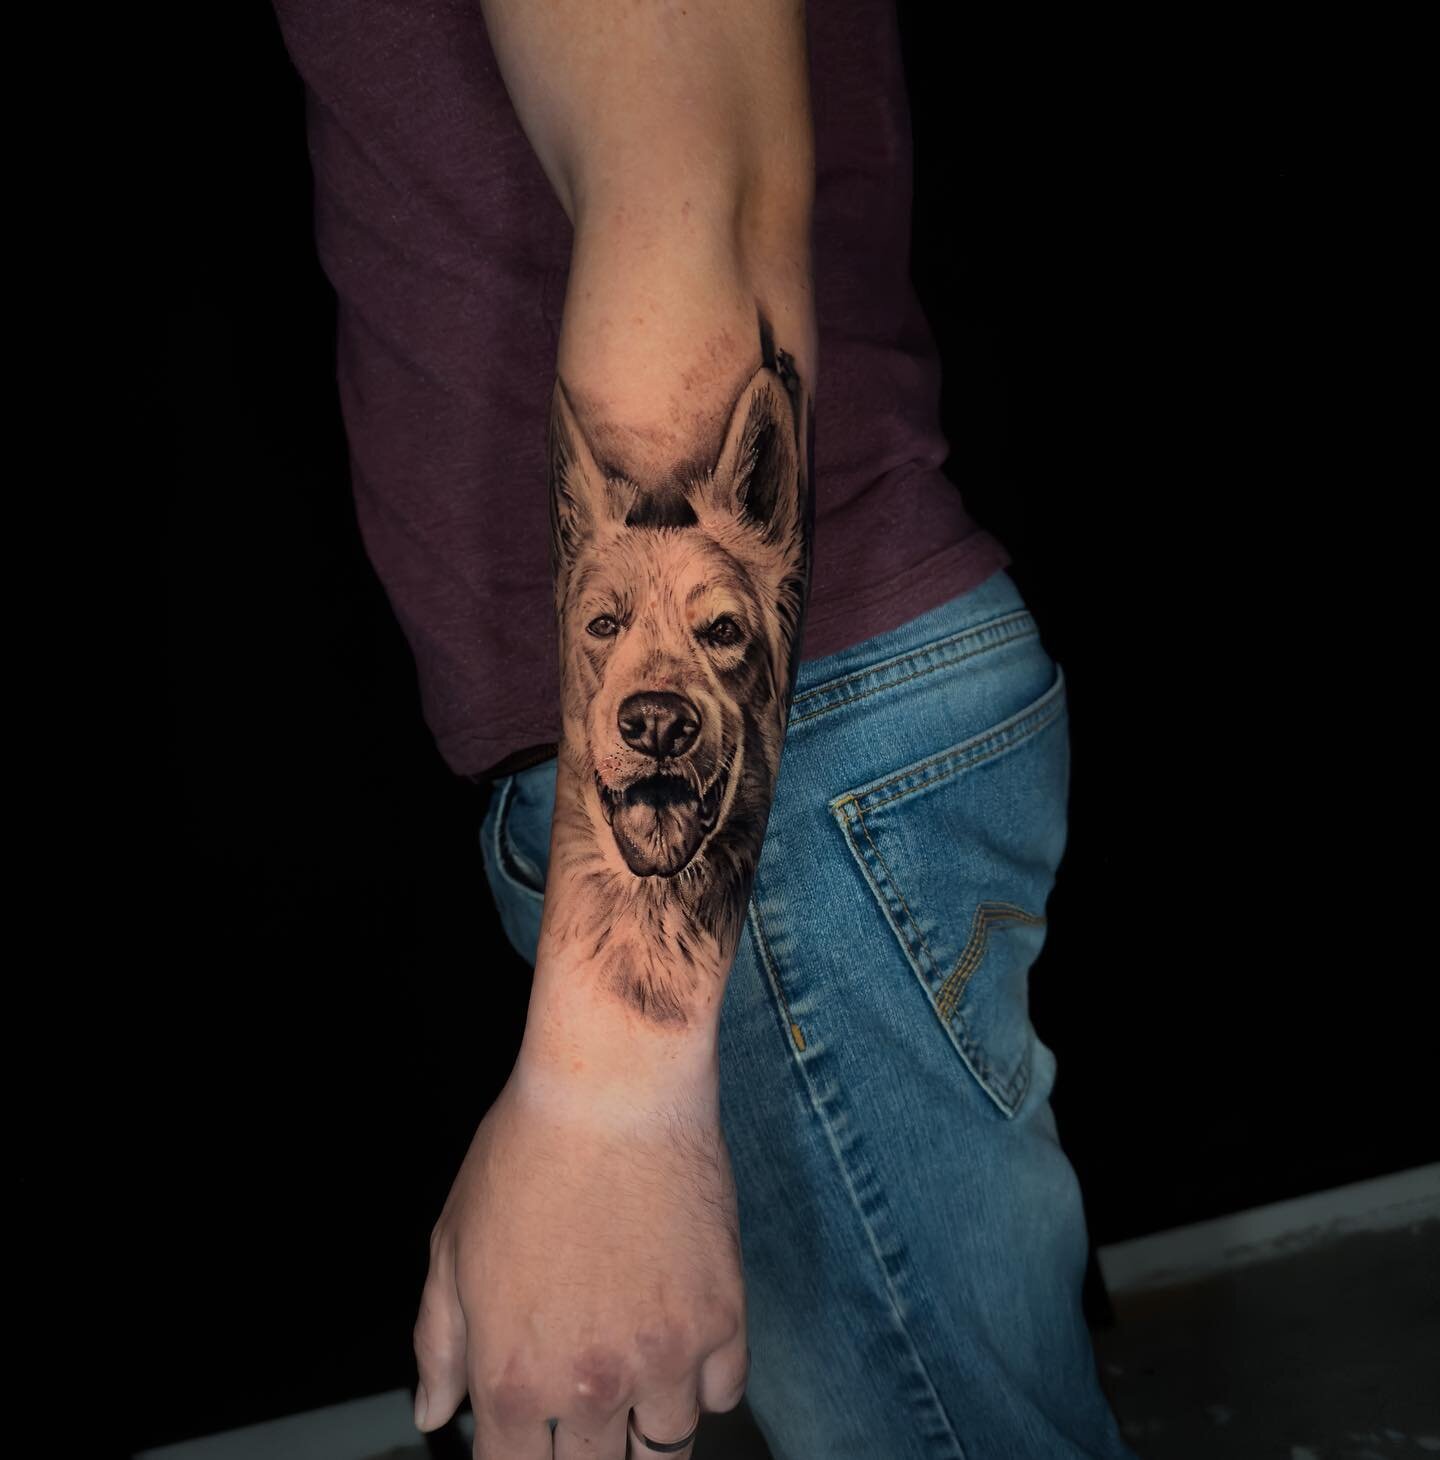 first session beginning of the sleeve. #tattoo #tattoos #tattooed #tattooer #dogtattoo #germanytattoo #animalstattoo #blackandgreytattoo #dogportrait #art #ink #heidelberg #schwetzingen #mannheim